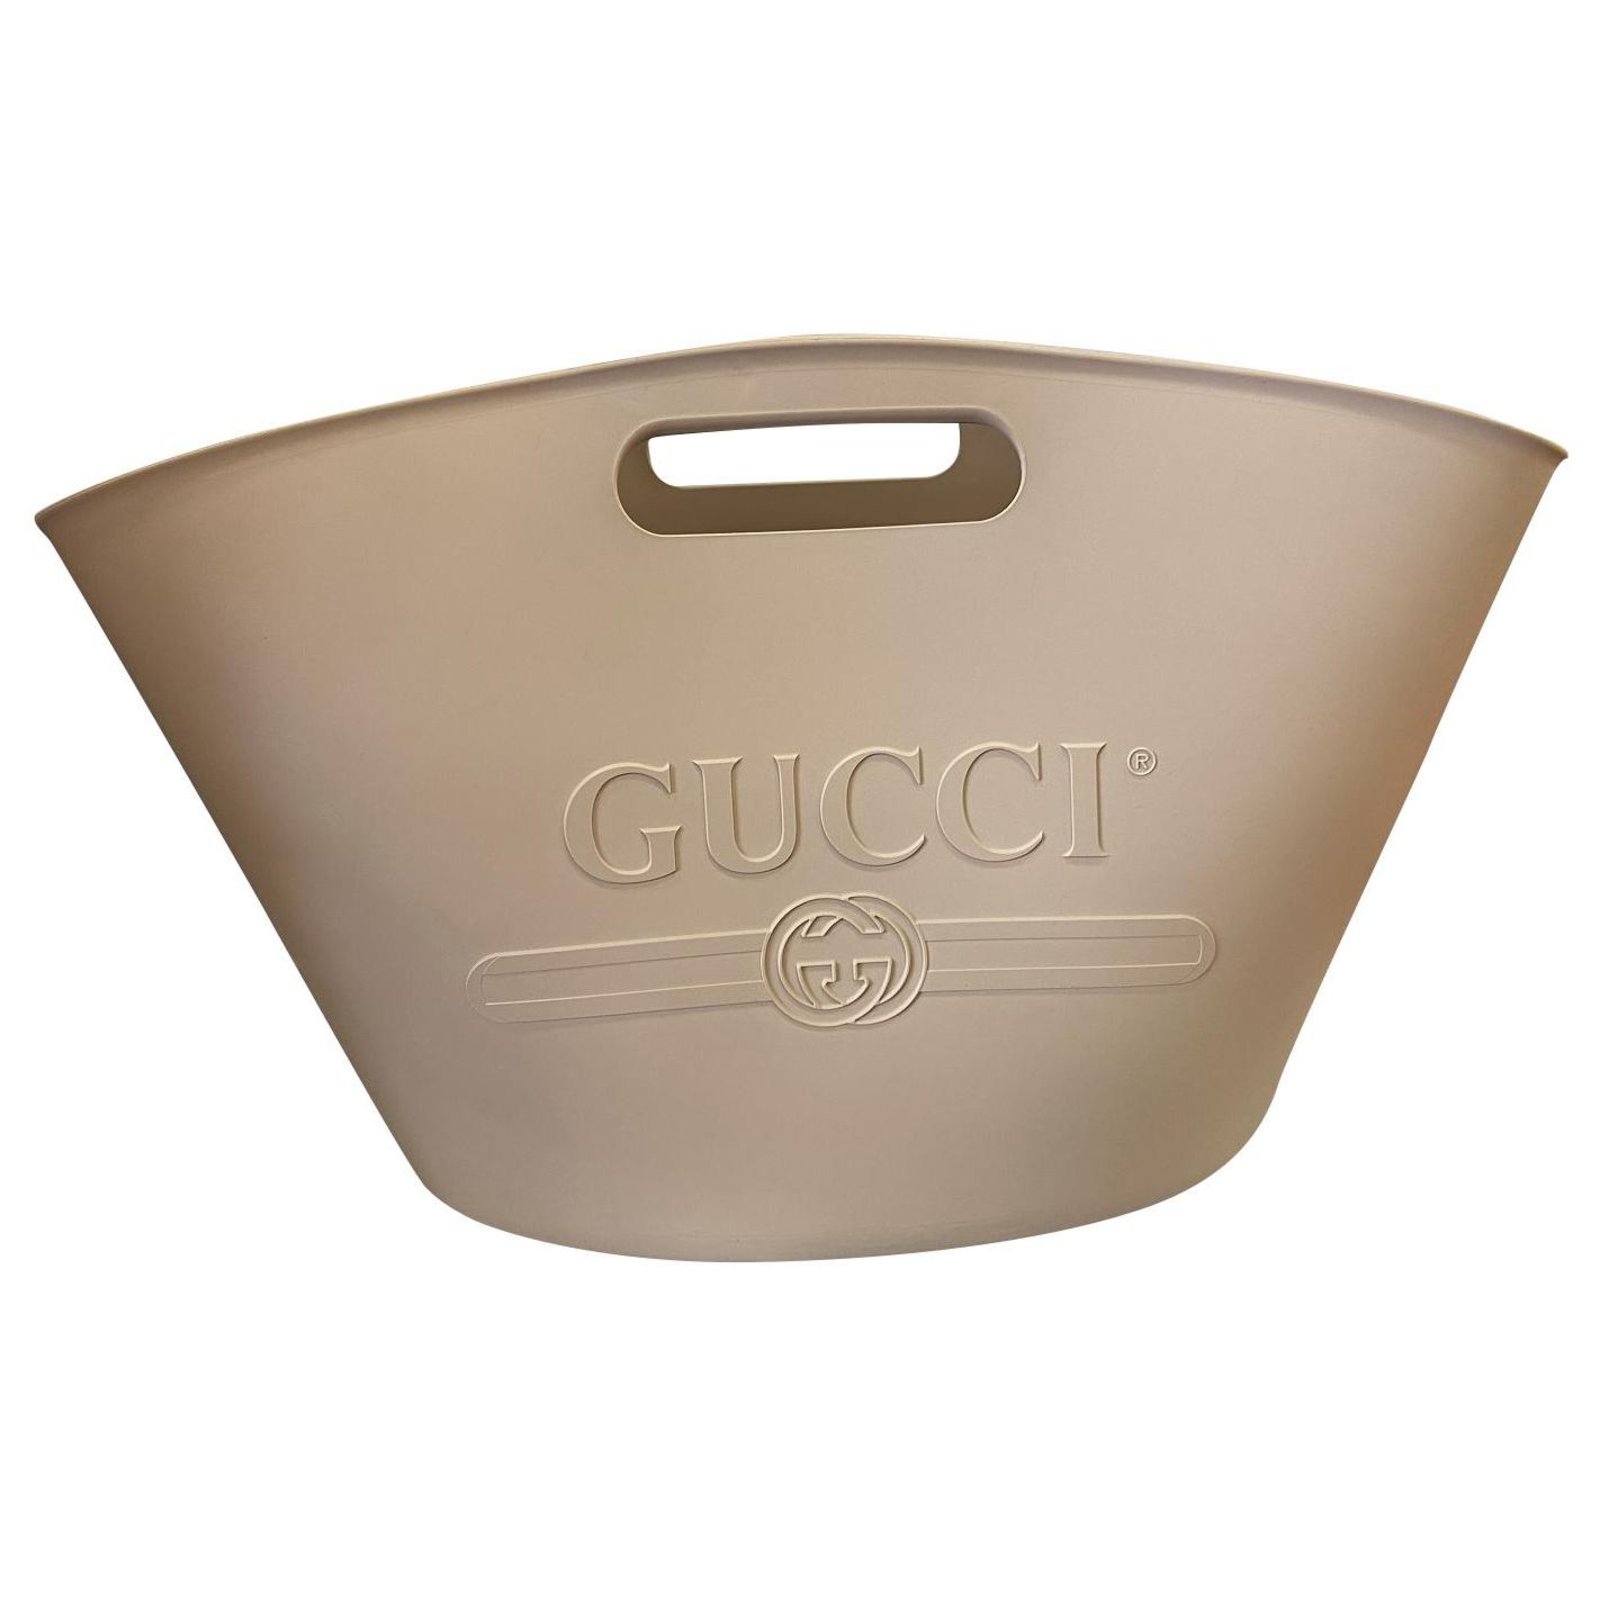 Gucci Girls' GG Rubber Tote Bag